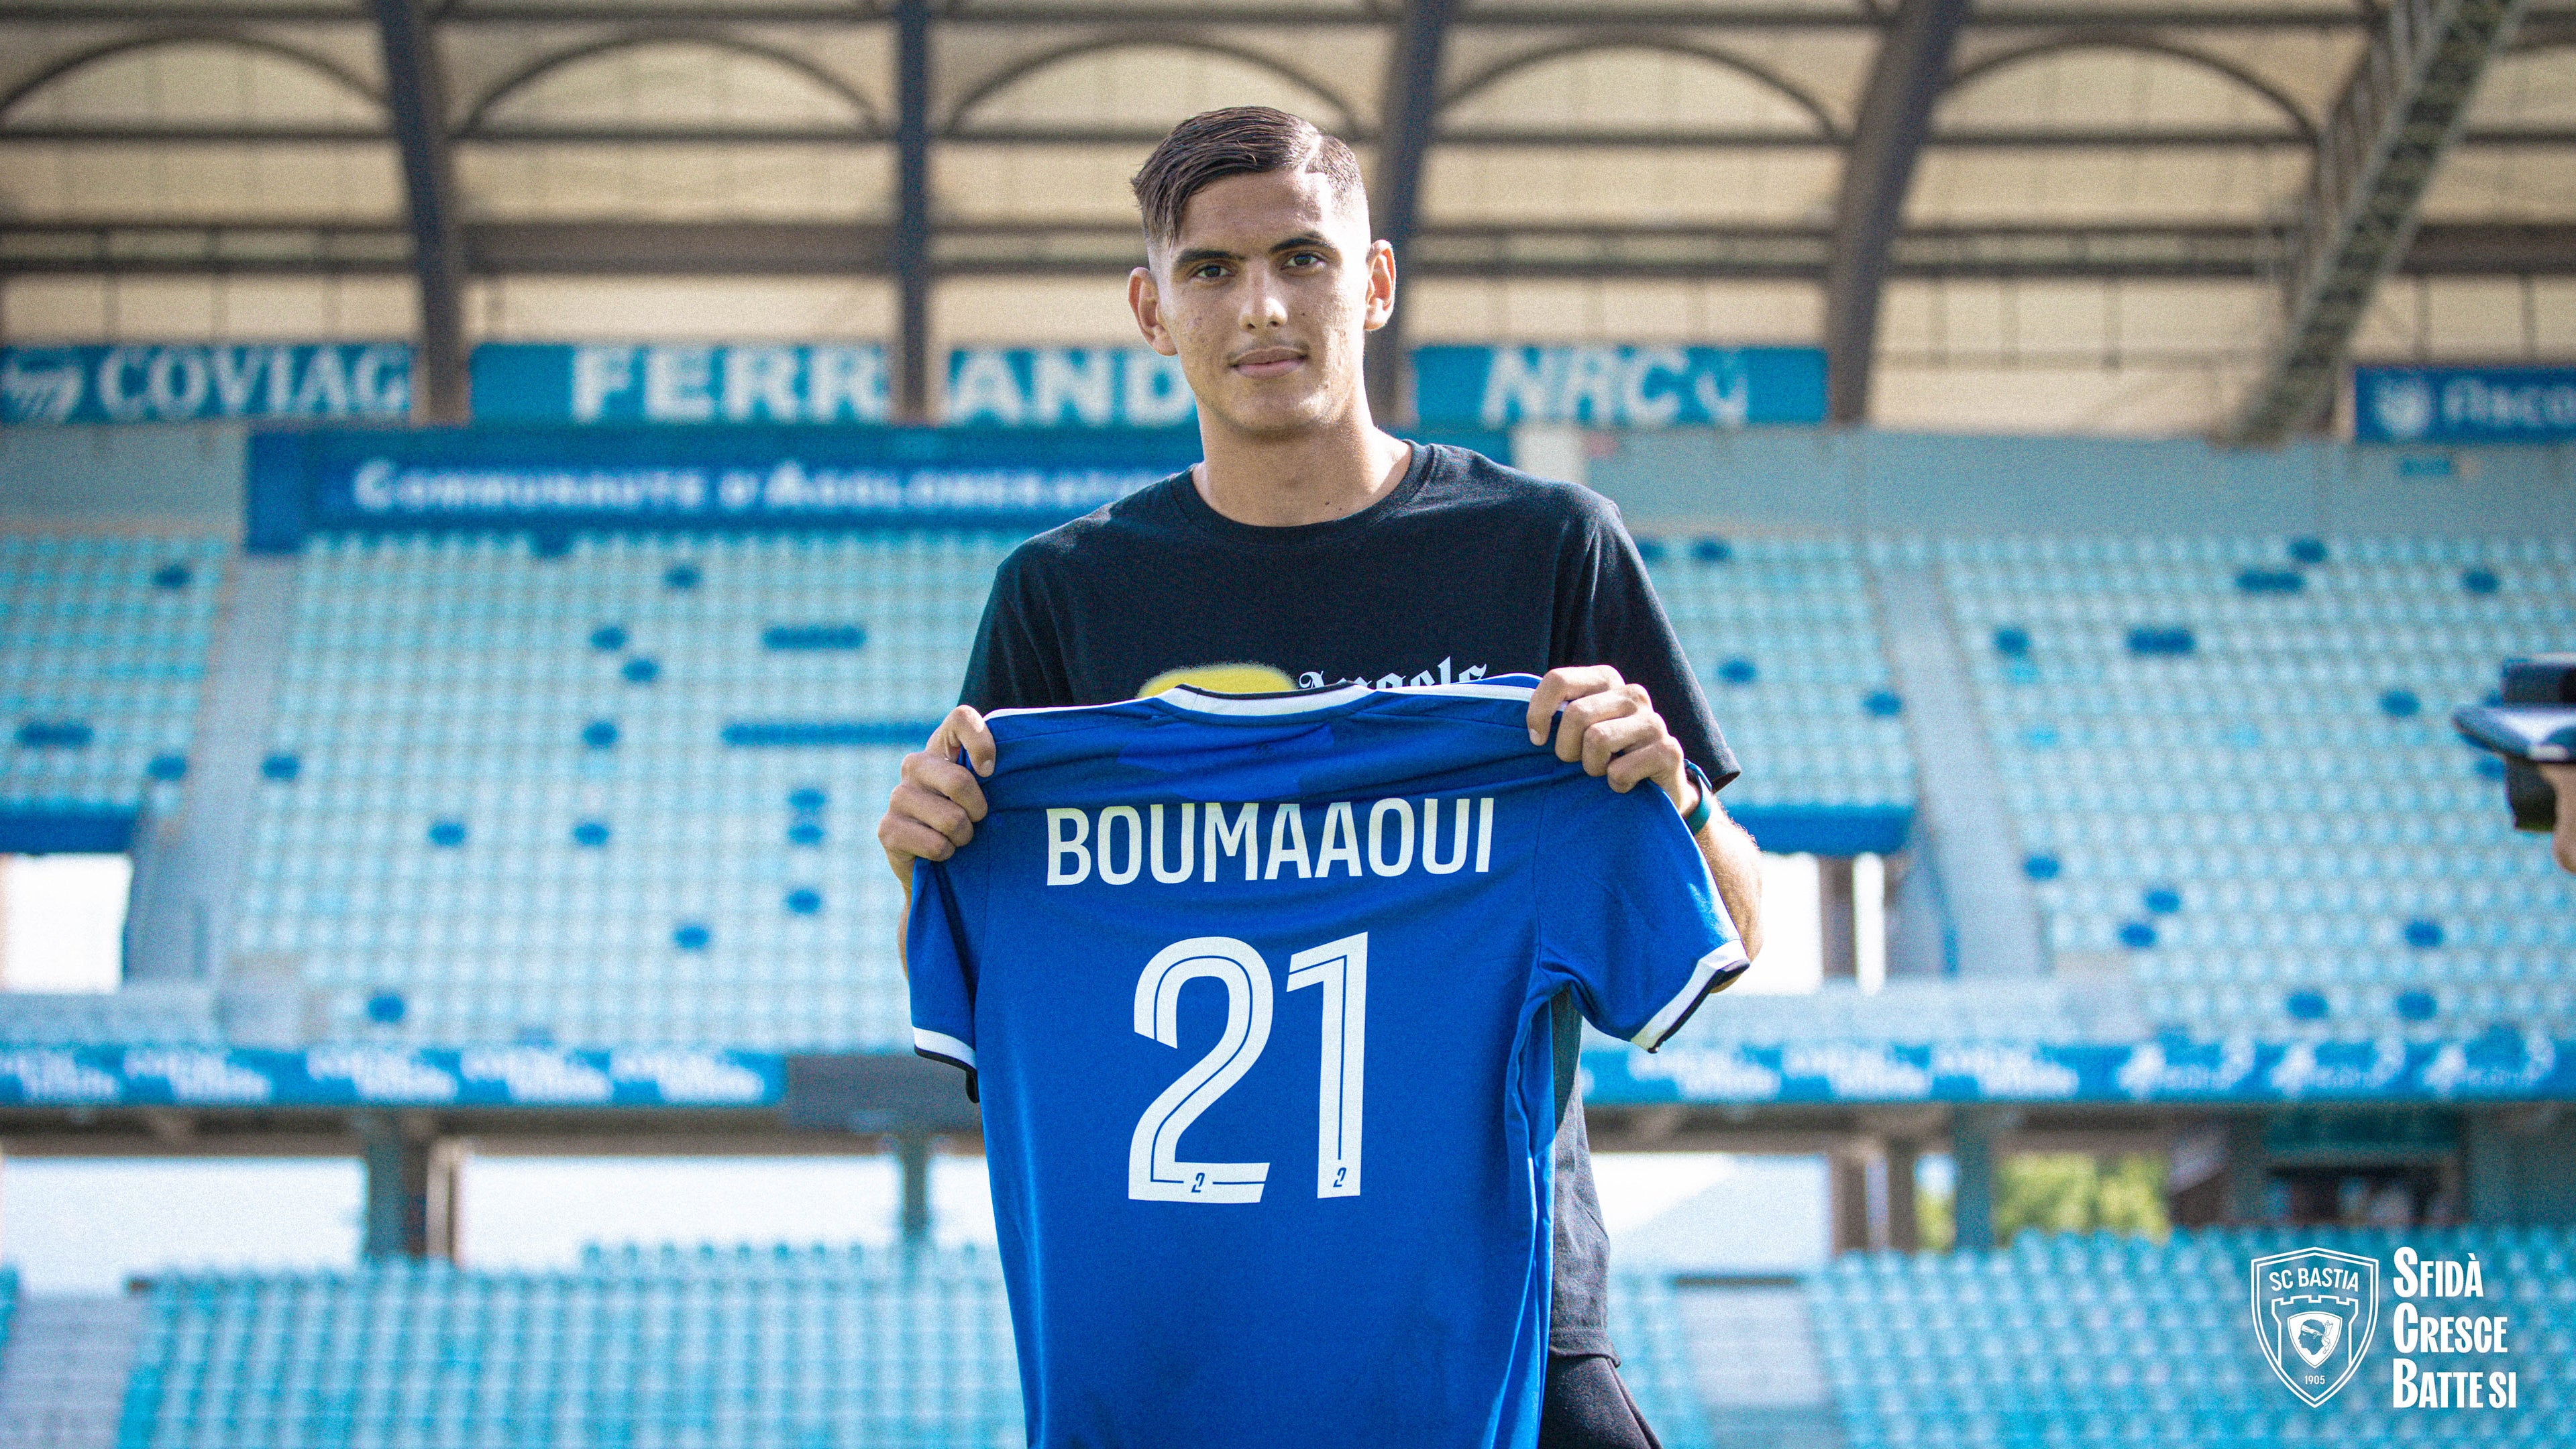 Mohamed Boumaaoui signe en professionnel avec le Sporting